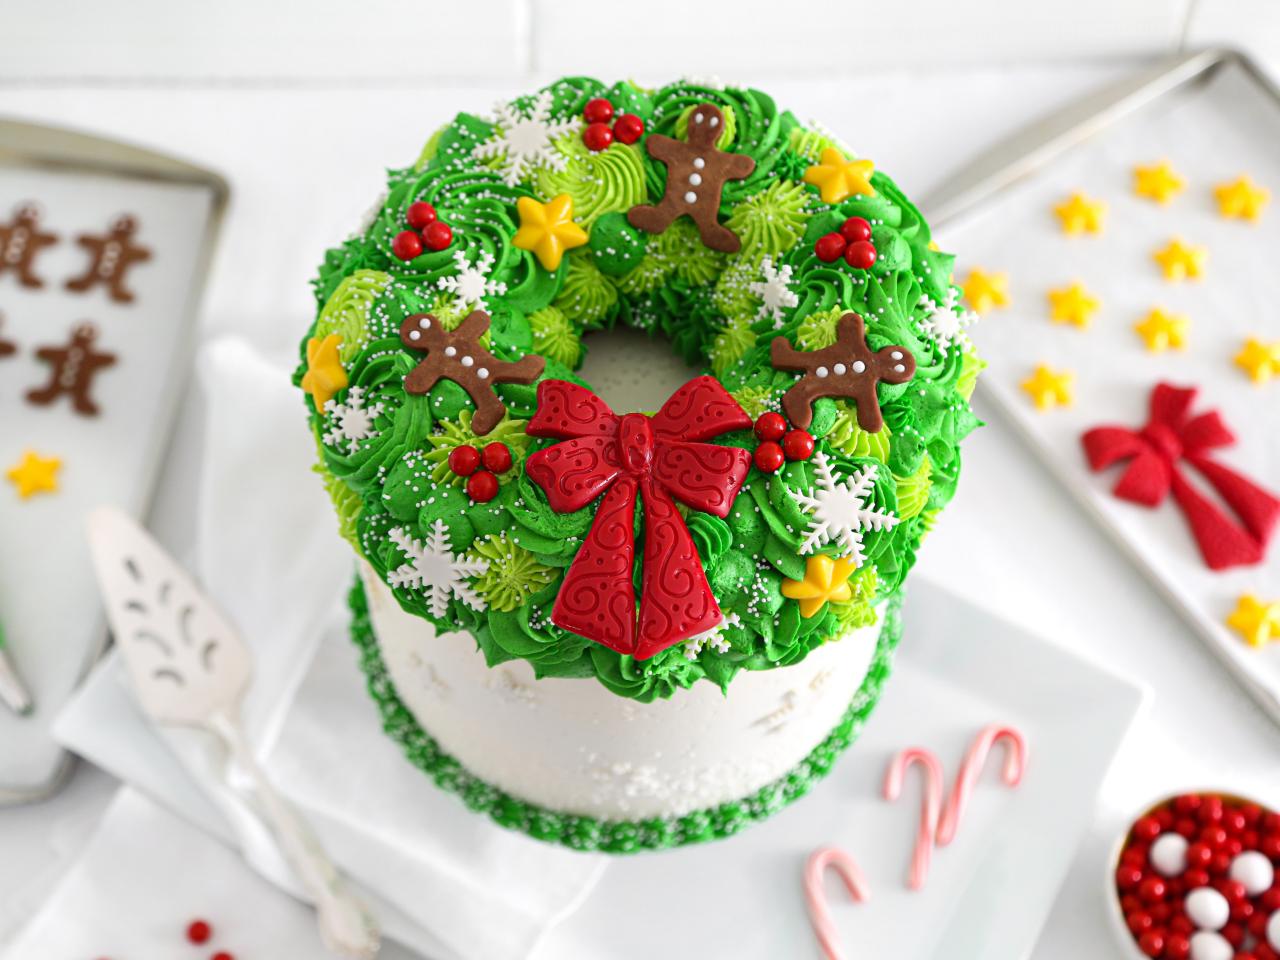 https://food.fnr.sndimg.com/content/dam/images/food/fullset/2021/11/19/Bakery_Inspired_Christmas_Wreath_Layer_Cake_2021_s4x3.jpg.rend.hgtvcom.1280.960.suffix/1637351961661.jpeg